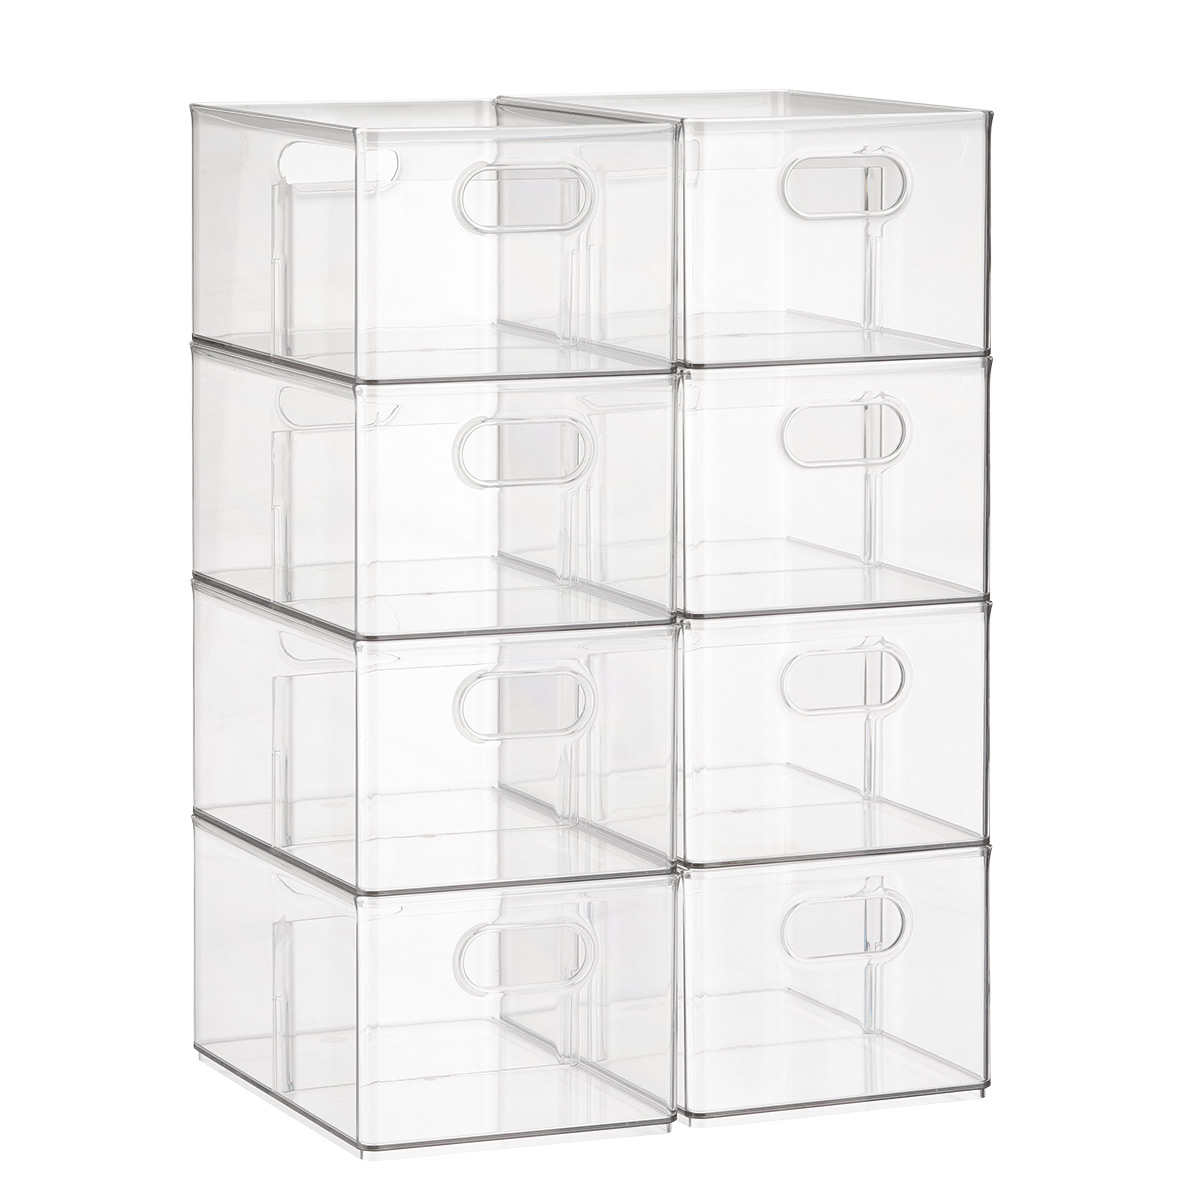 Case of 8 T.H.E. Divided Freezer Bin Clear